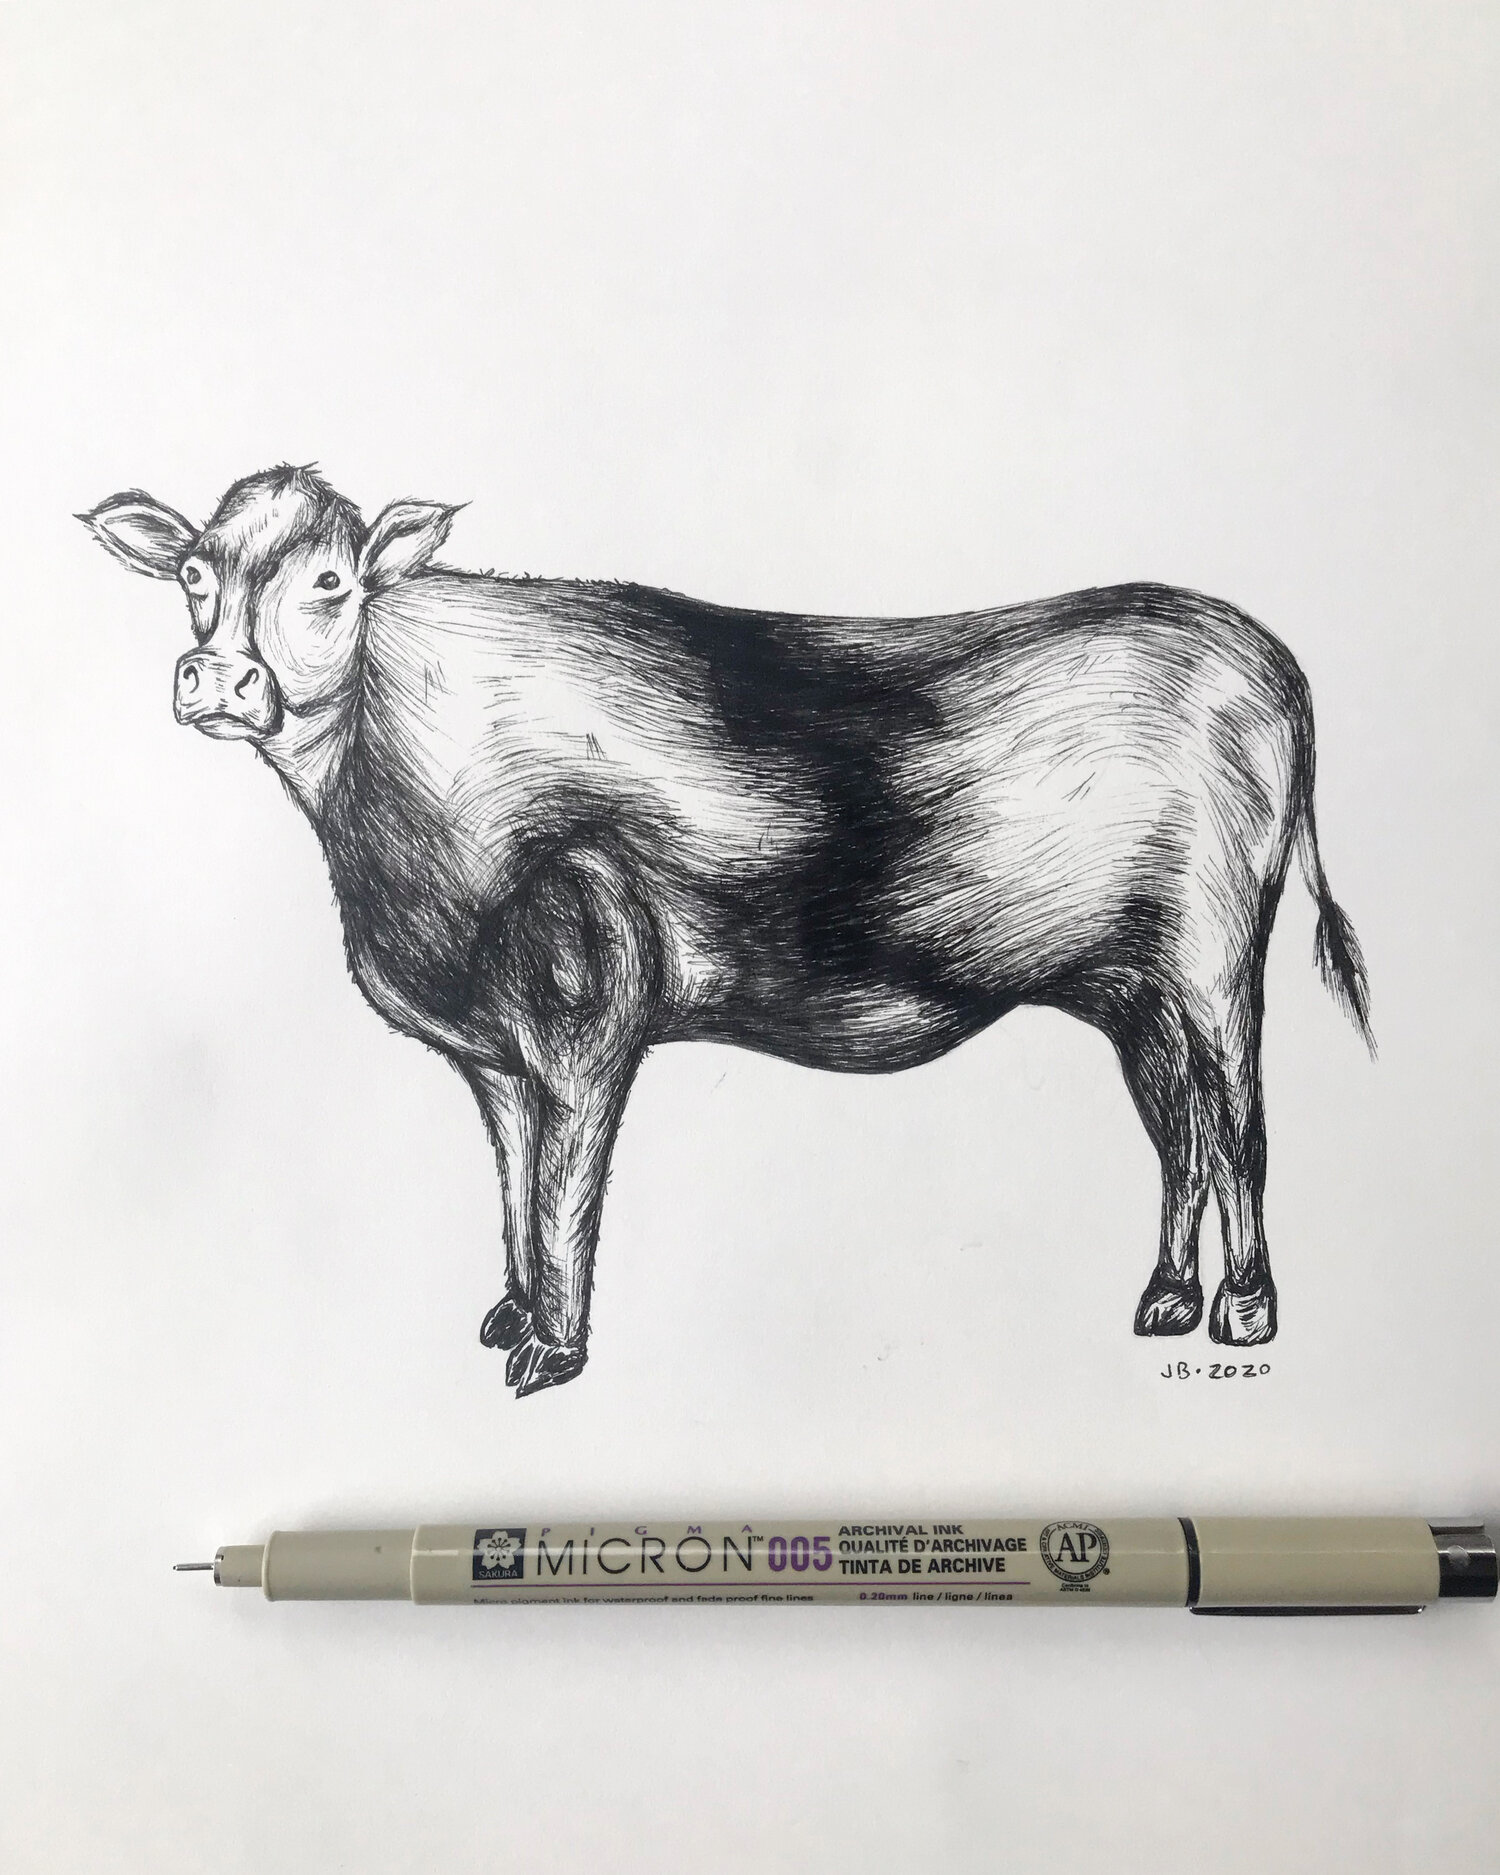 https://images.squarespace-cdn.com/content/v1/5e8a262d607e562c2667fcfa/1618596784658-F3K0HL33KO0GNGEGSJI9/cow+cattle+farm+drawing+ink+illustration.jpg?format=1500w